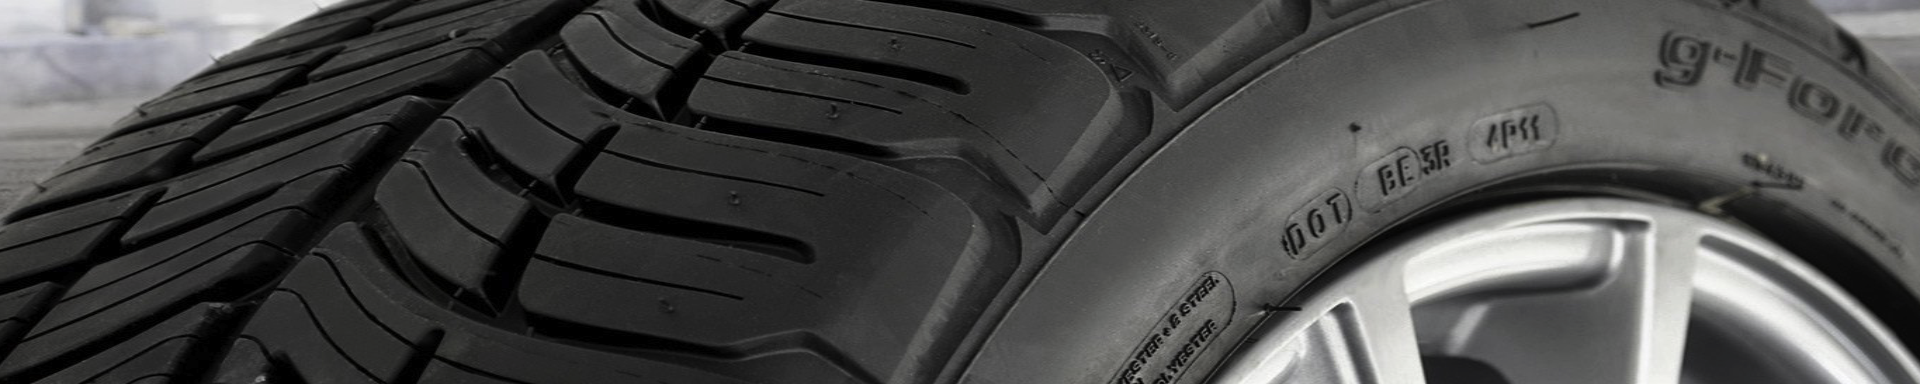 All Season Tires | GarageAndFab.com | Munro Industries gf-100103080801